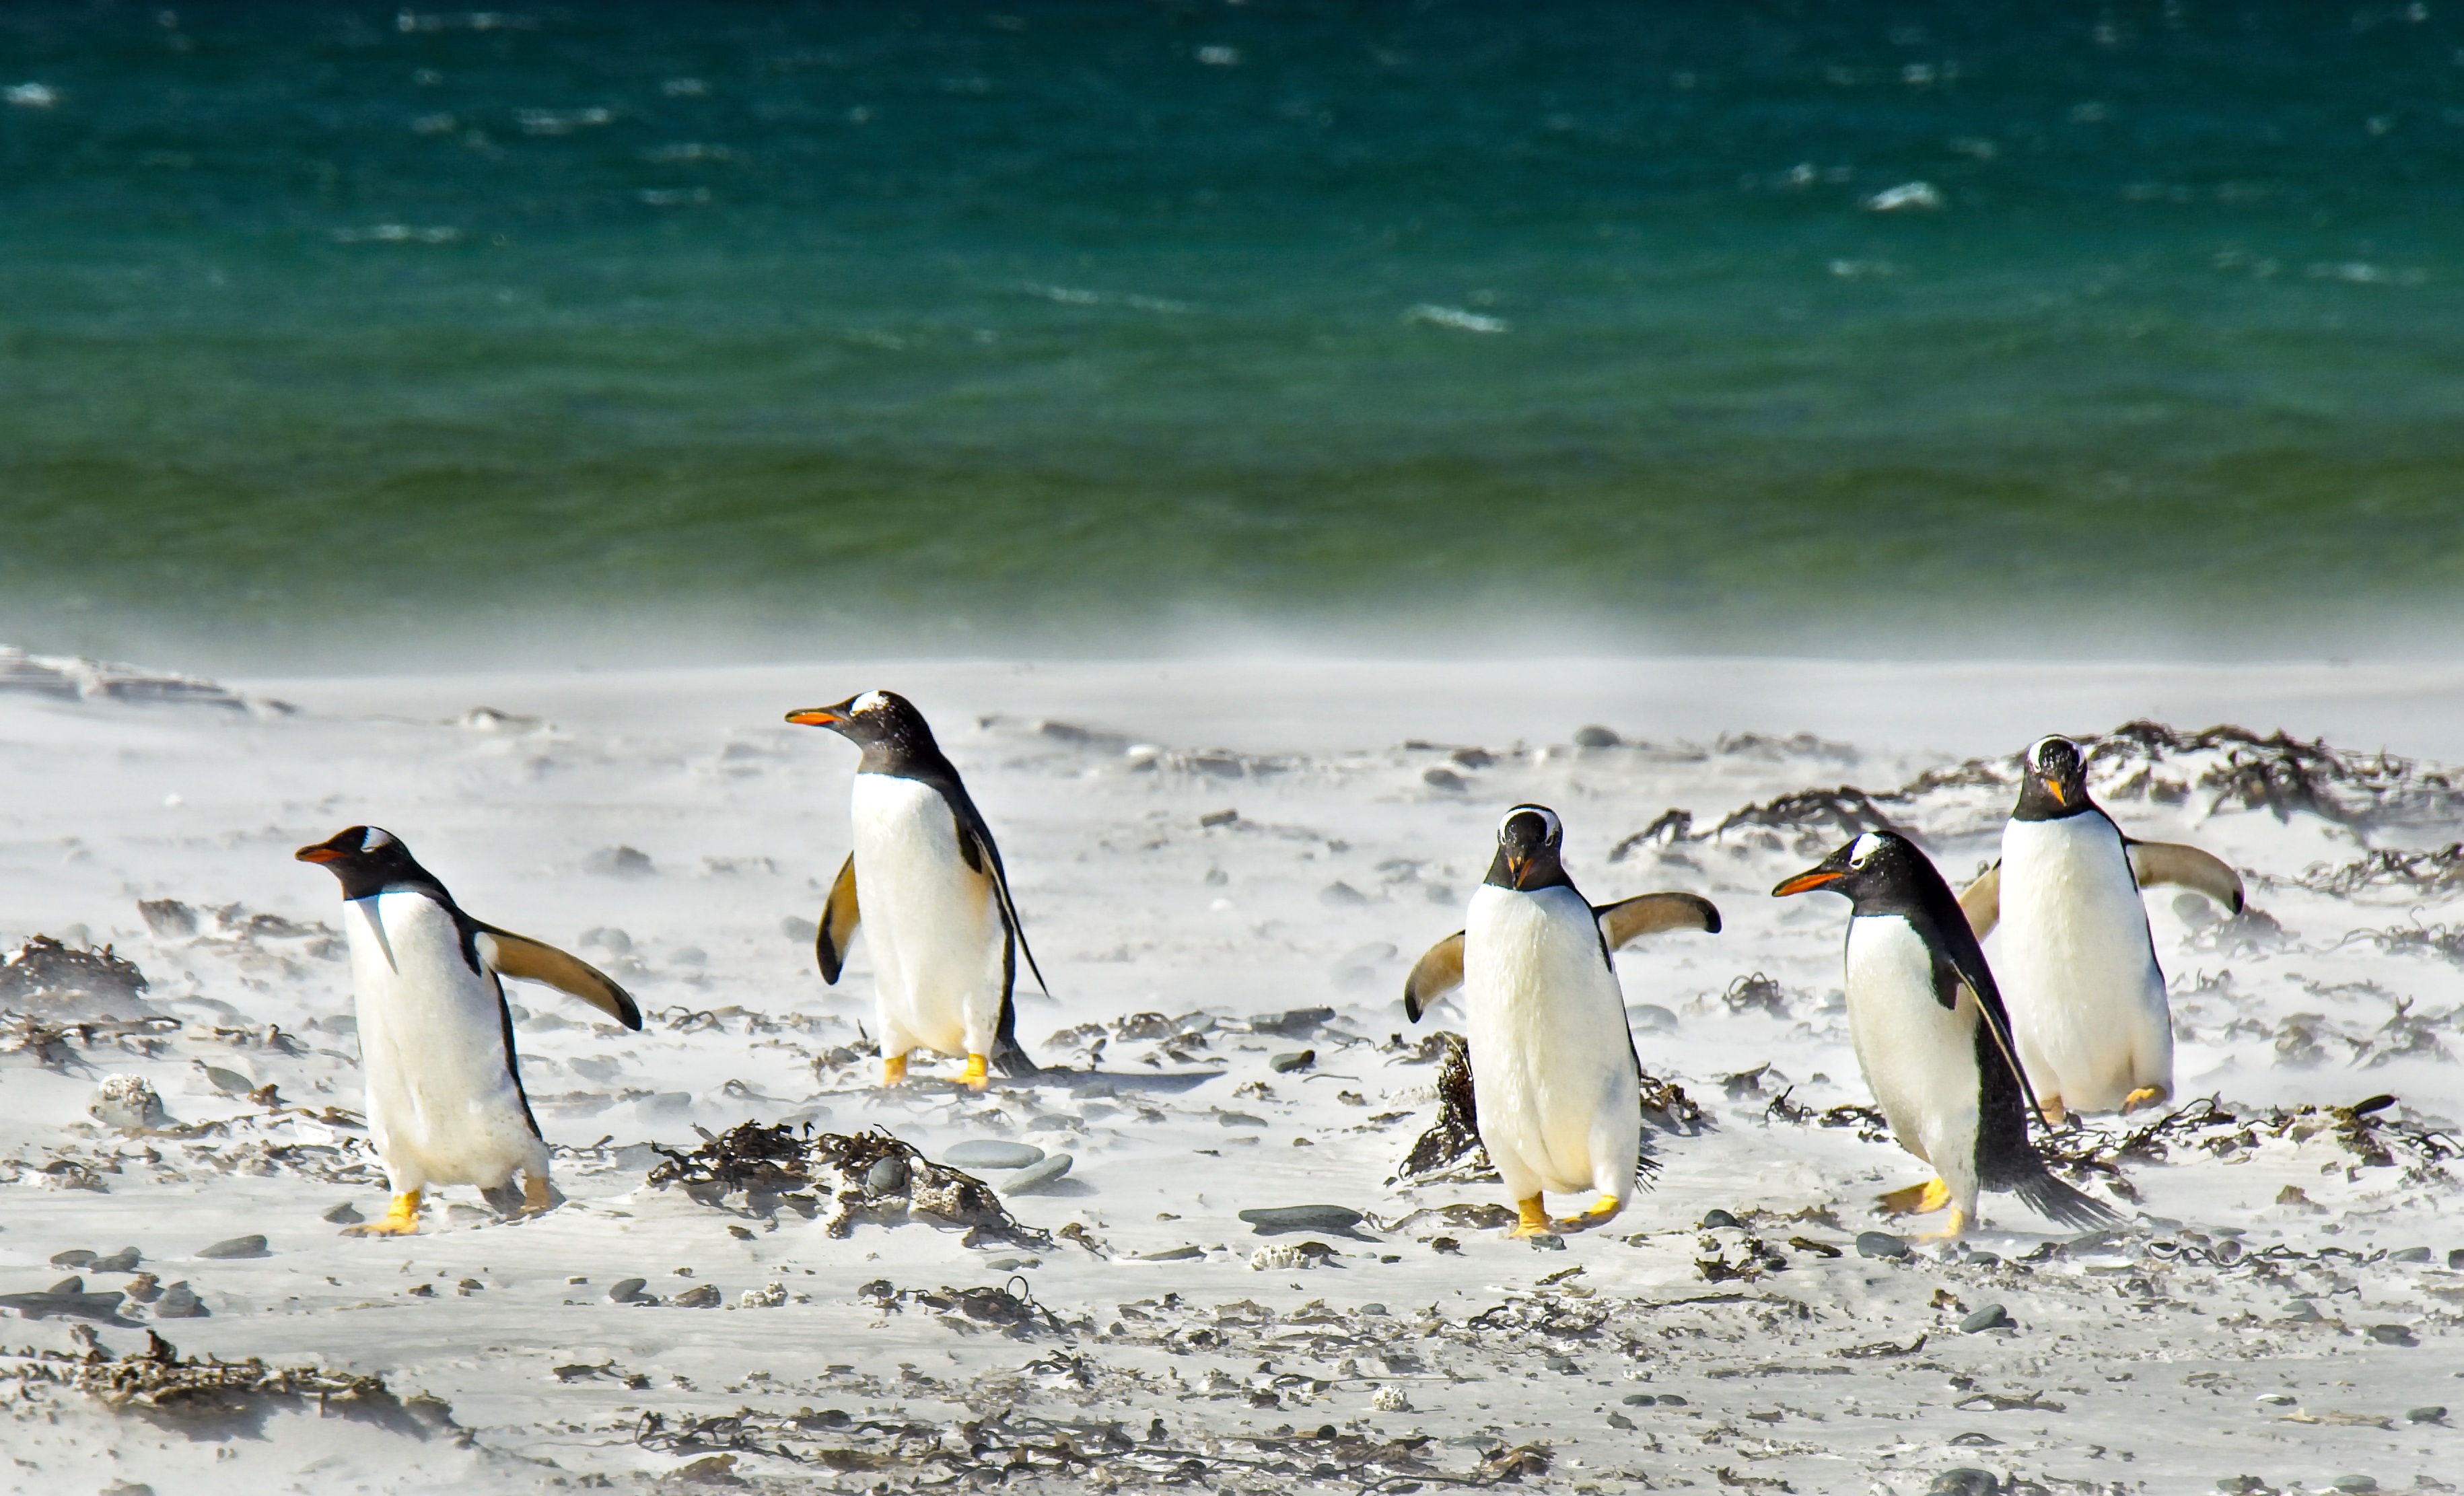 Zastaki.com - Стая пингвинов на снегу у моря